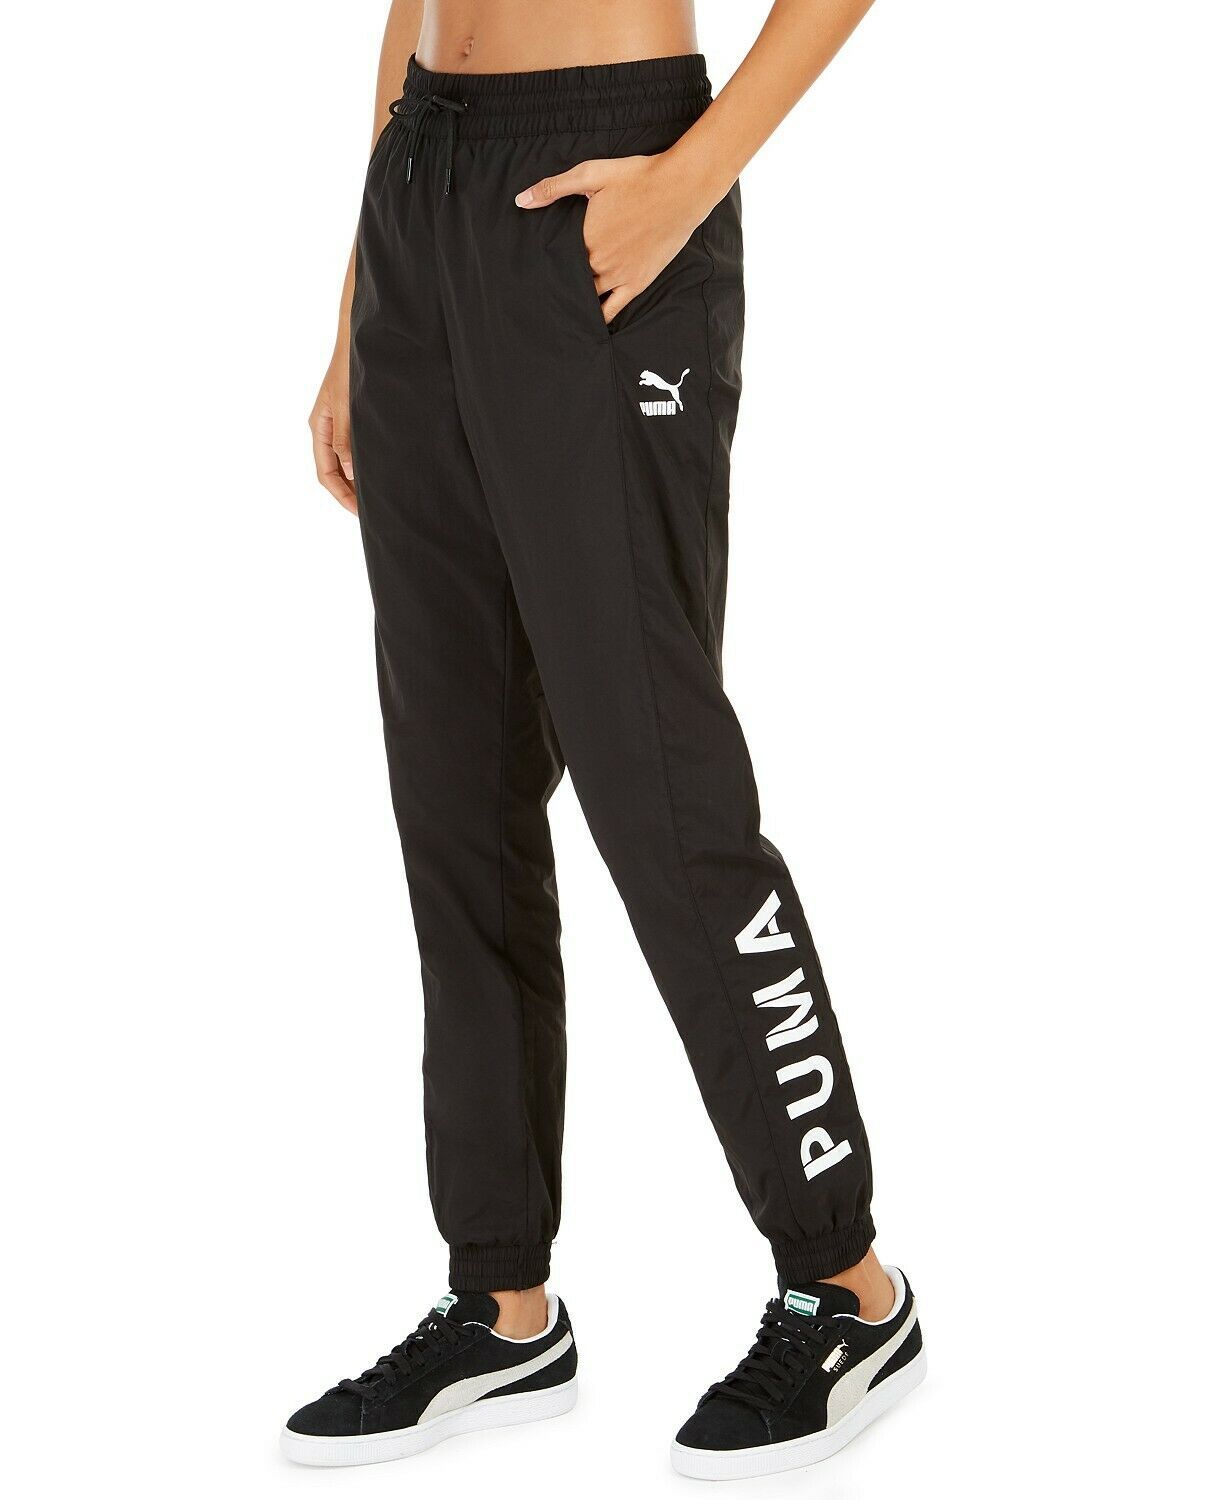 Puma Women's XTG Logo Track Pants, Black, M - Activewear Bottoms